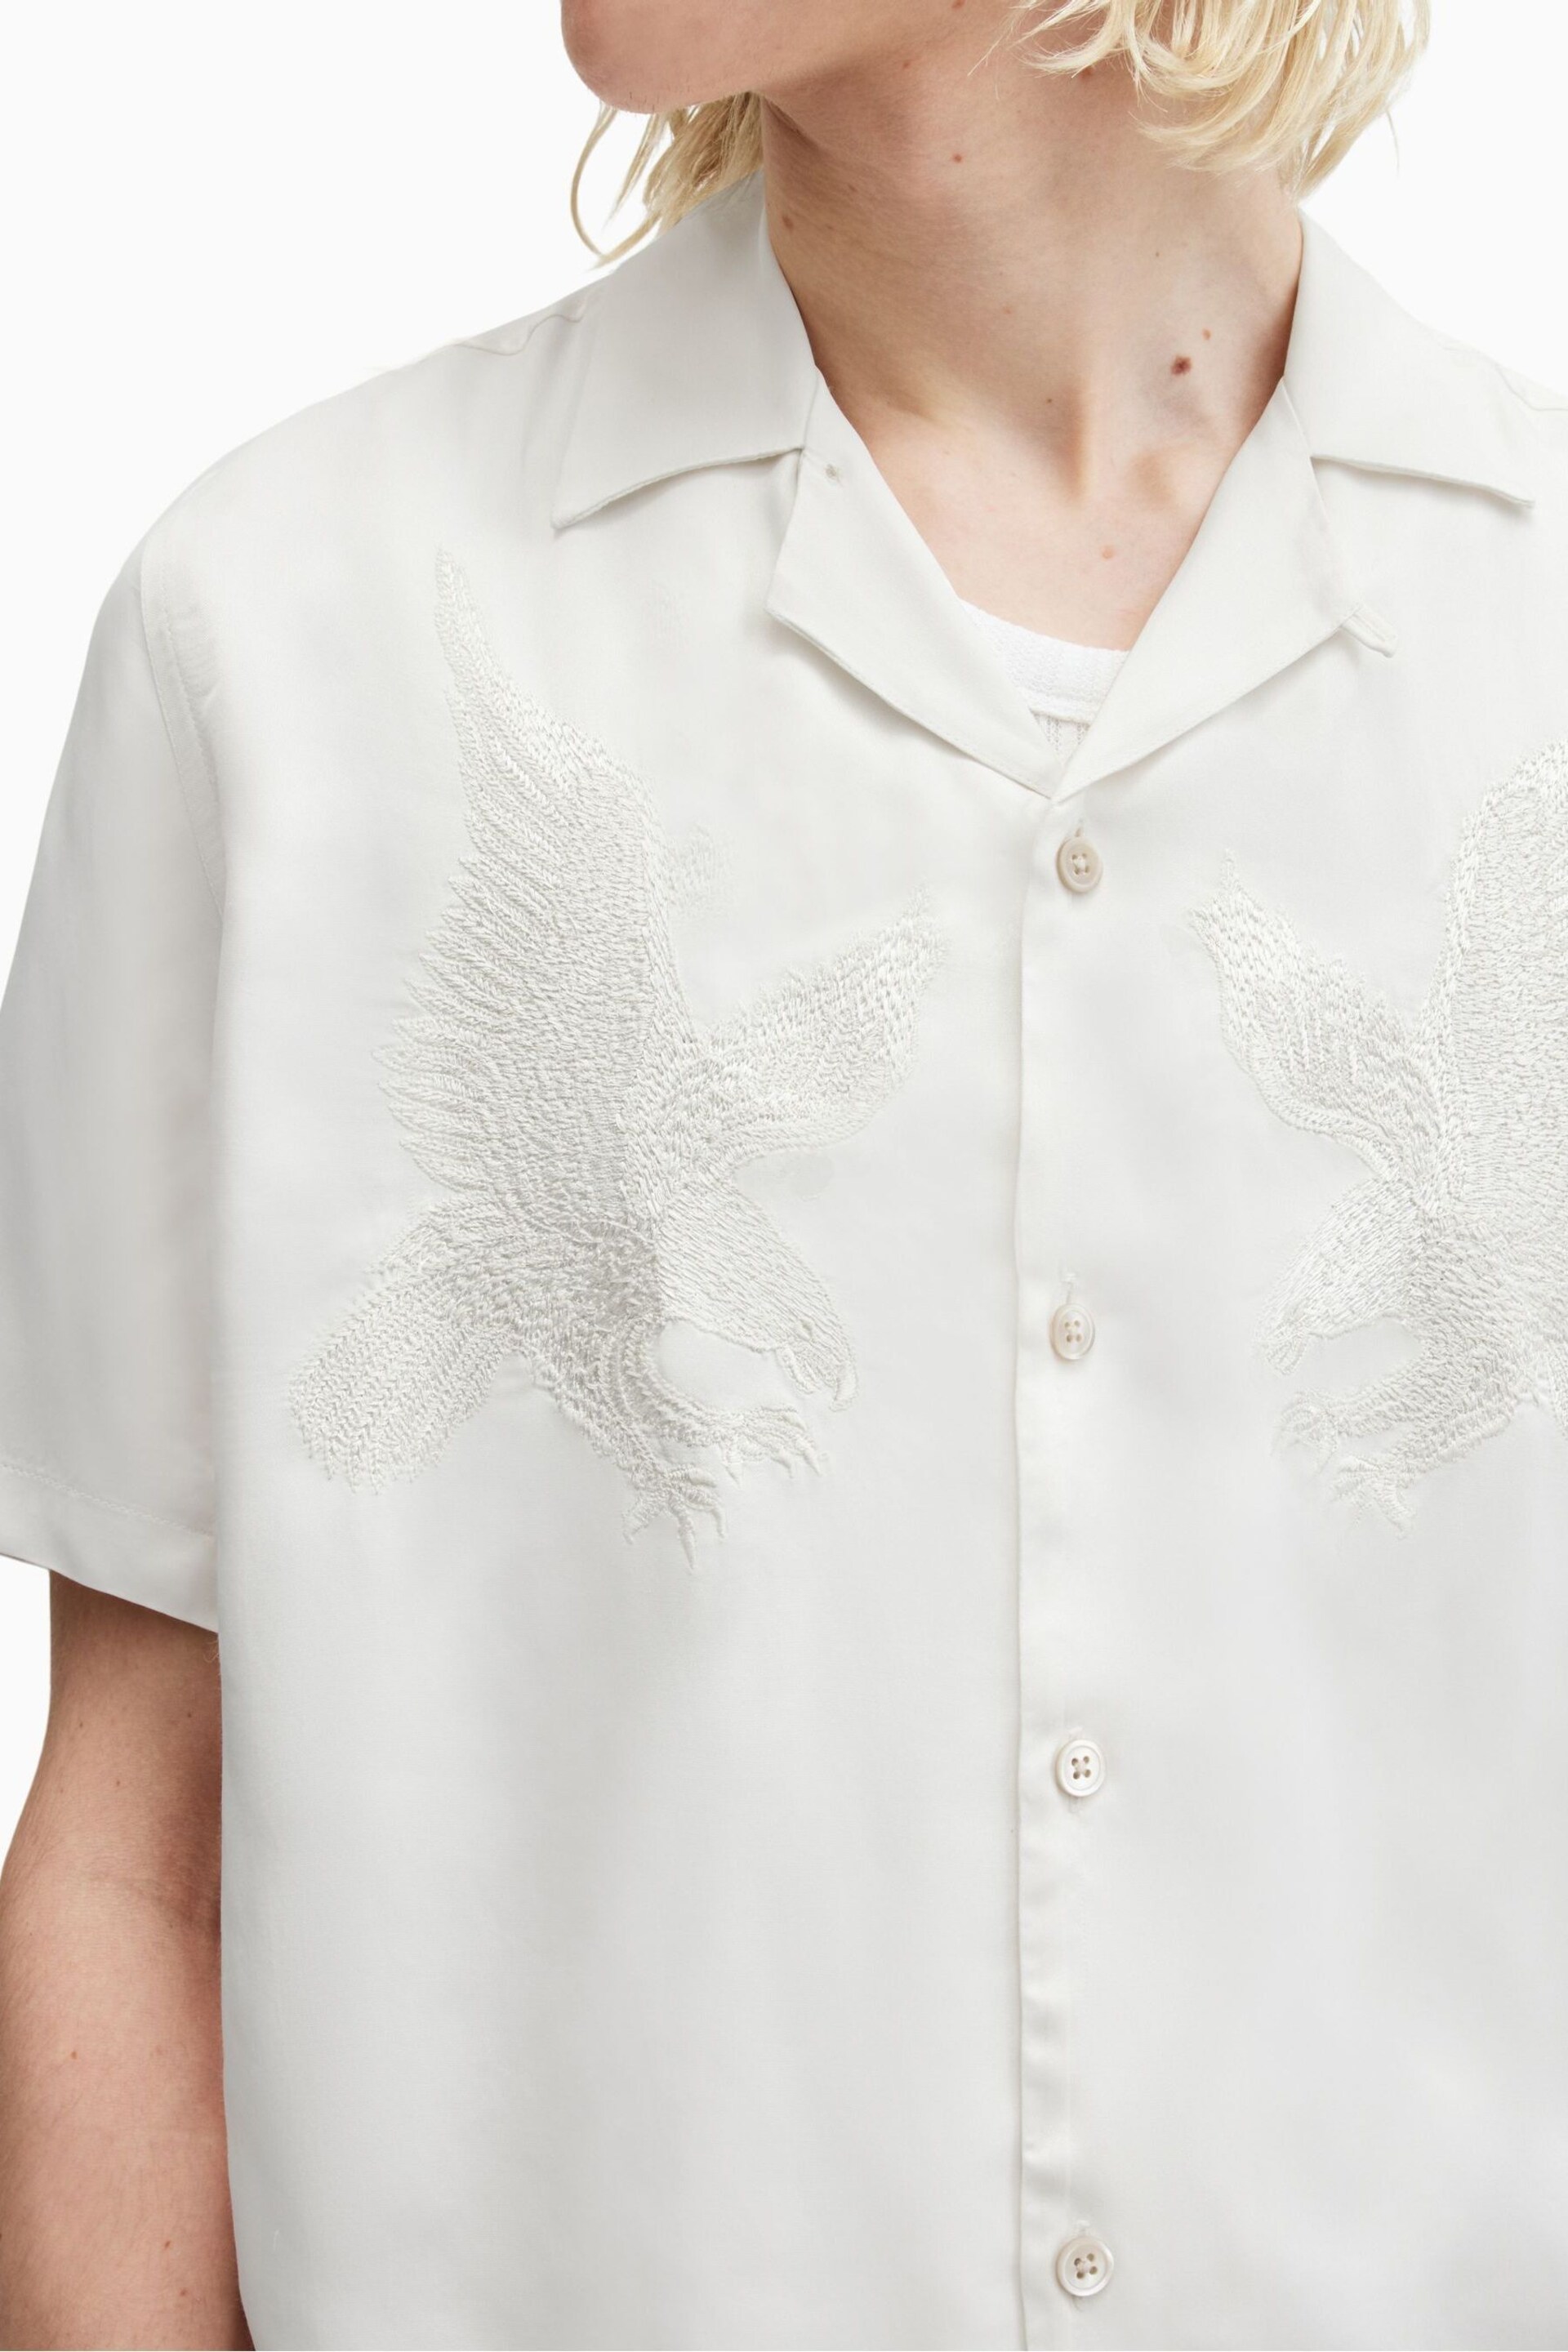 AllSaints White Aquila Short Sleeve Shirt - Image 2 of 7